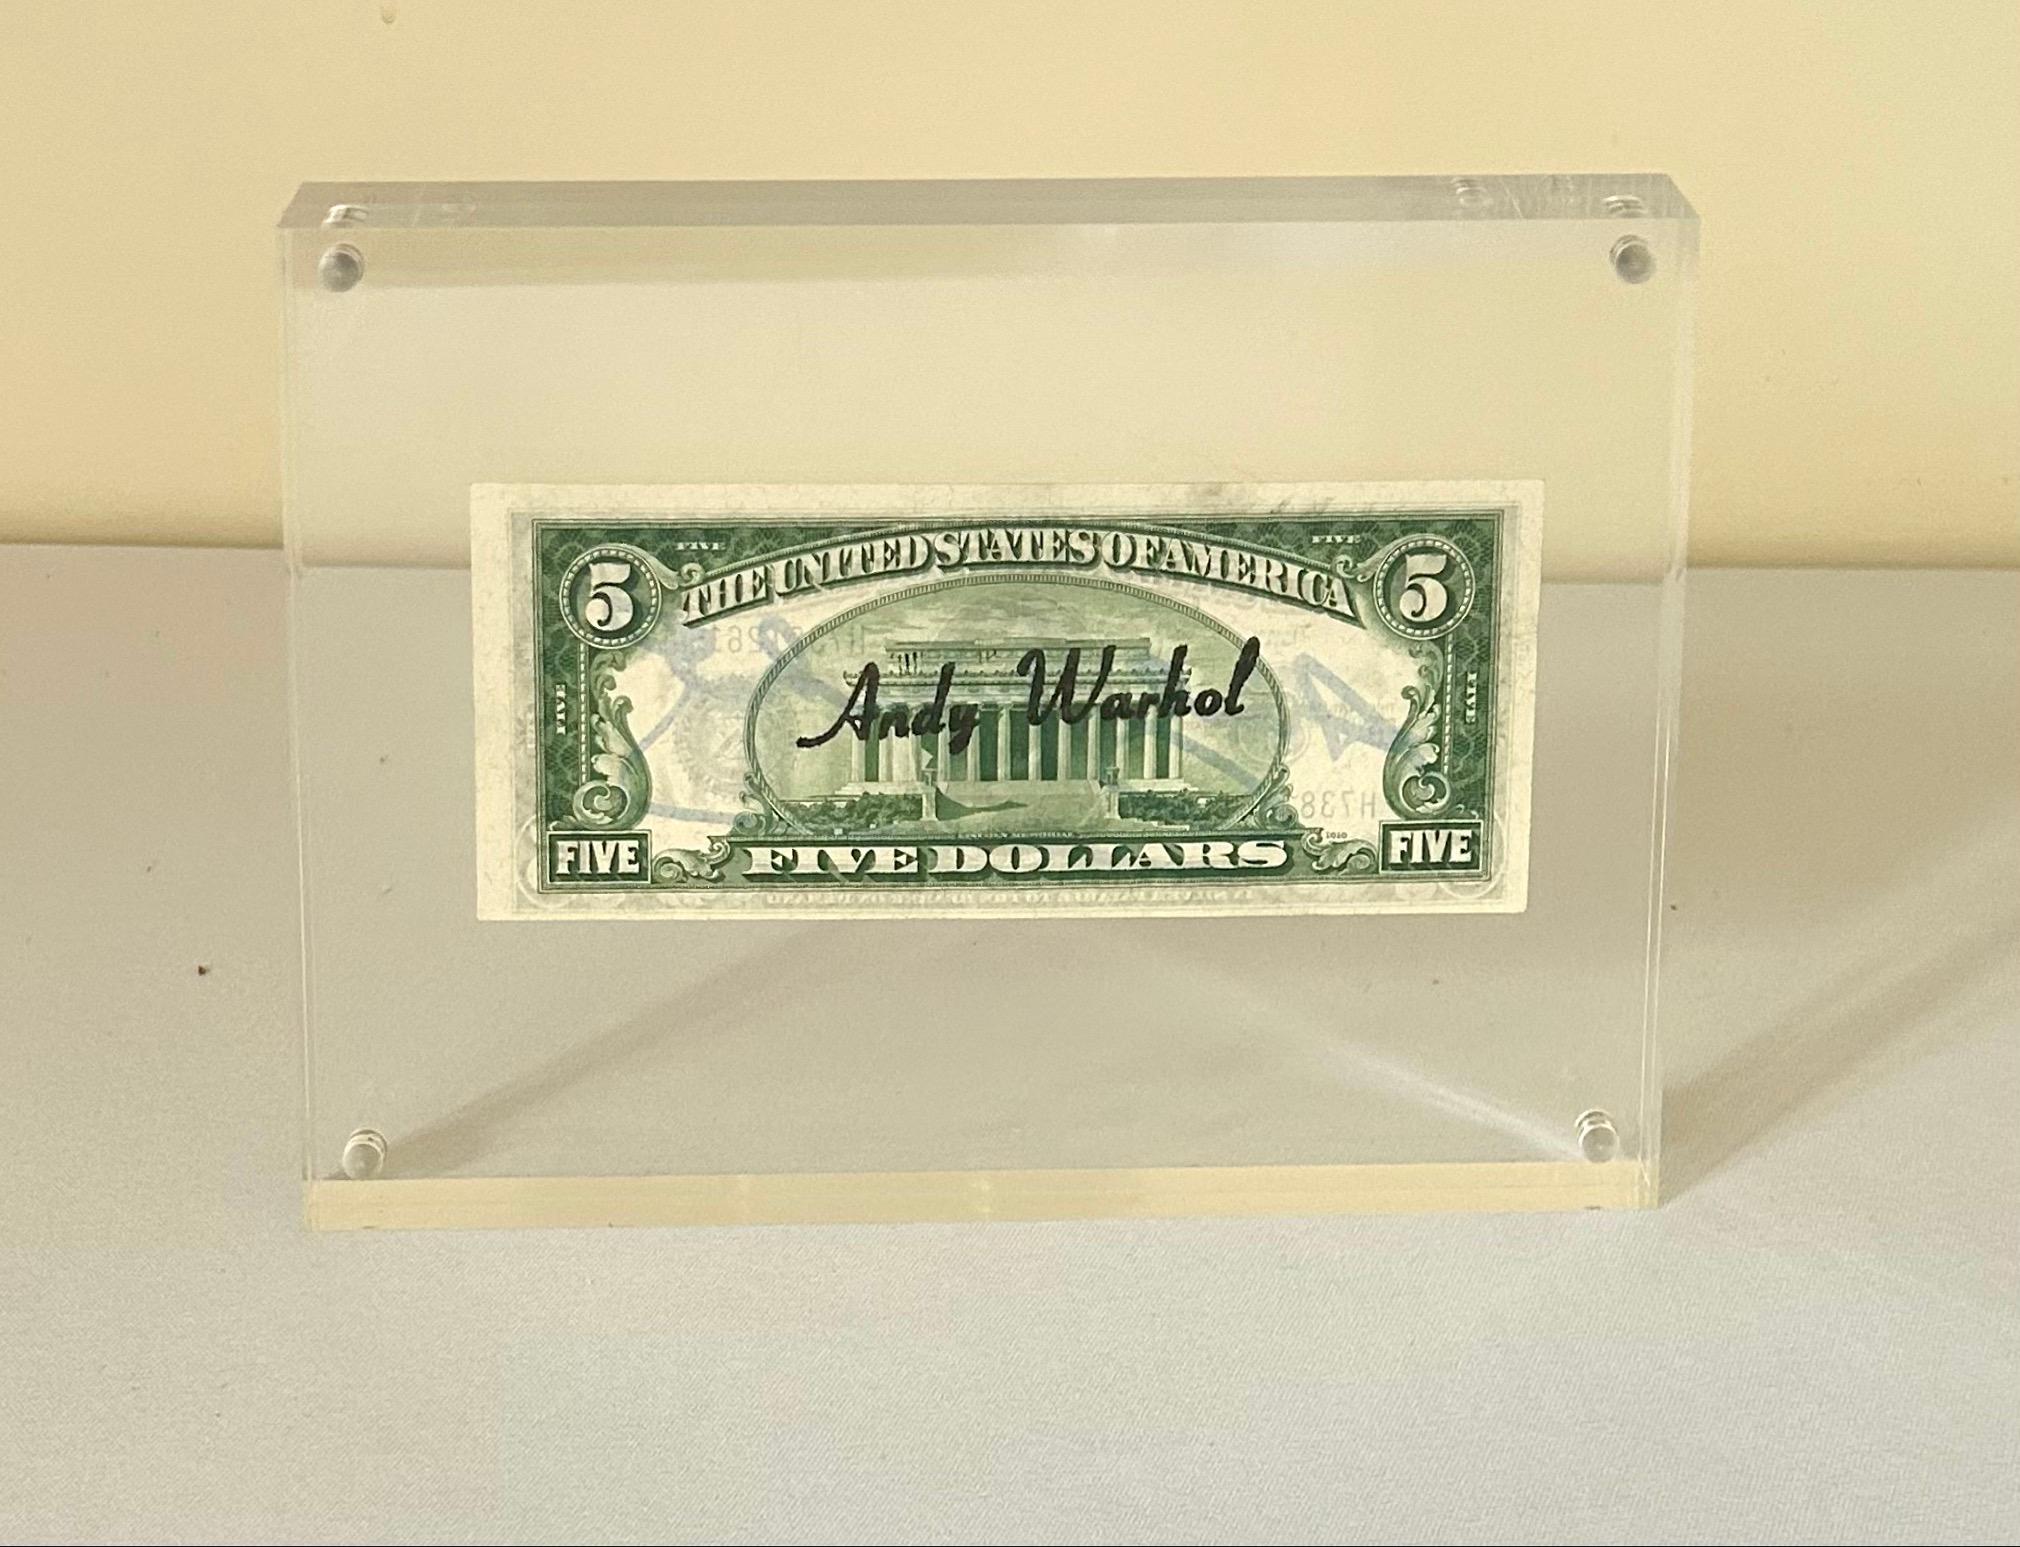 Five dollars bill - Pop Art Art by Andy Warhol